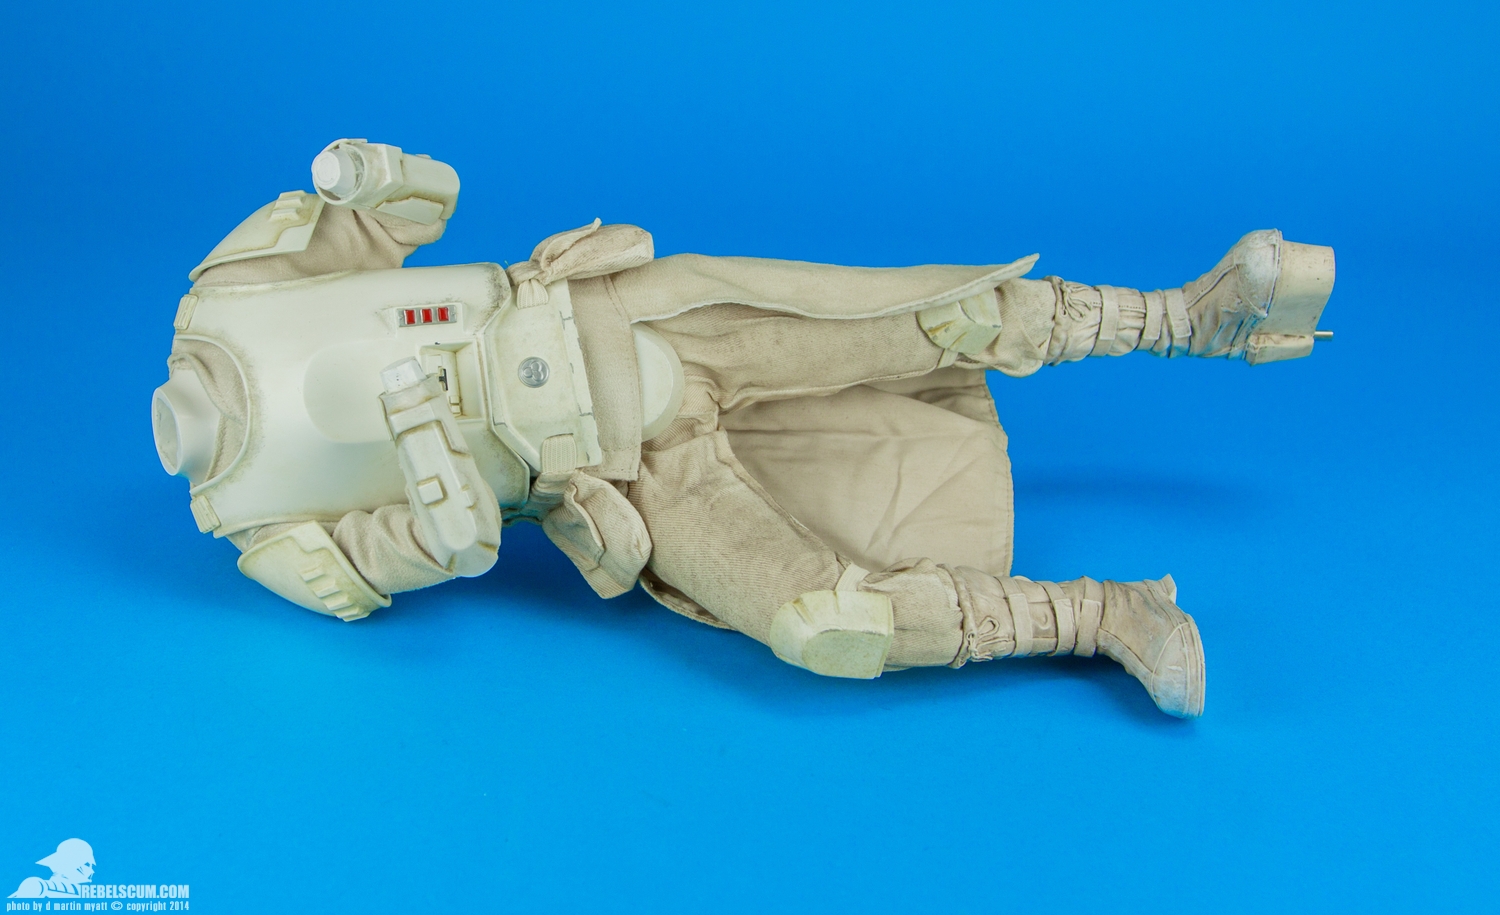 Snowtrooper-Premium-Format-Figure-Sideshow-Collectibles-014.jpg